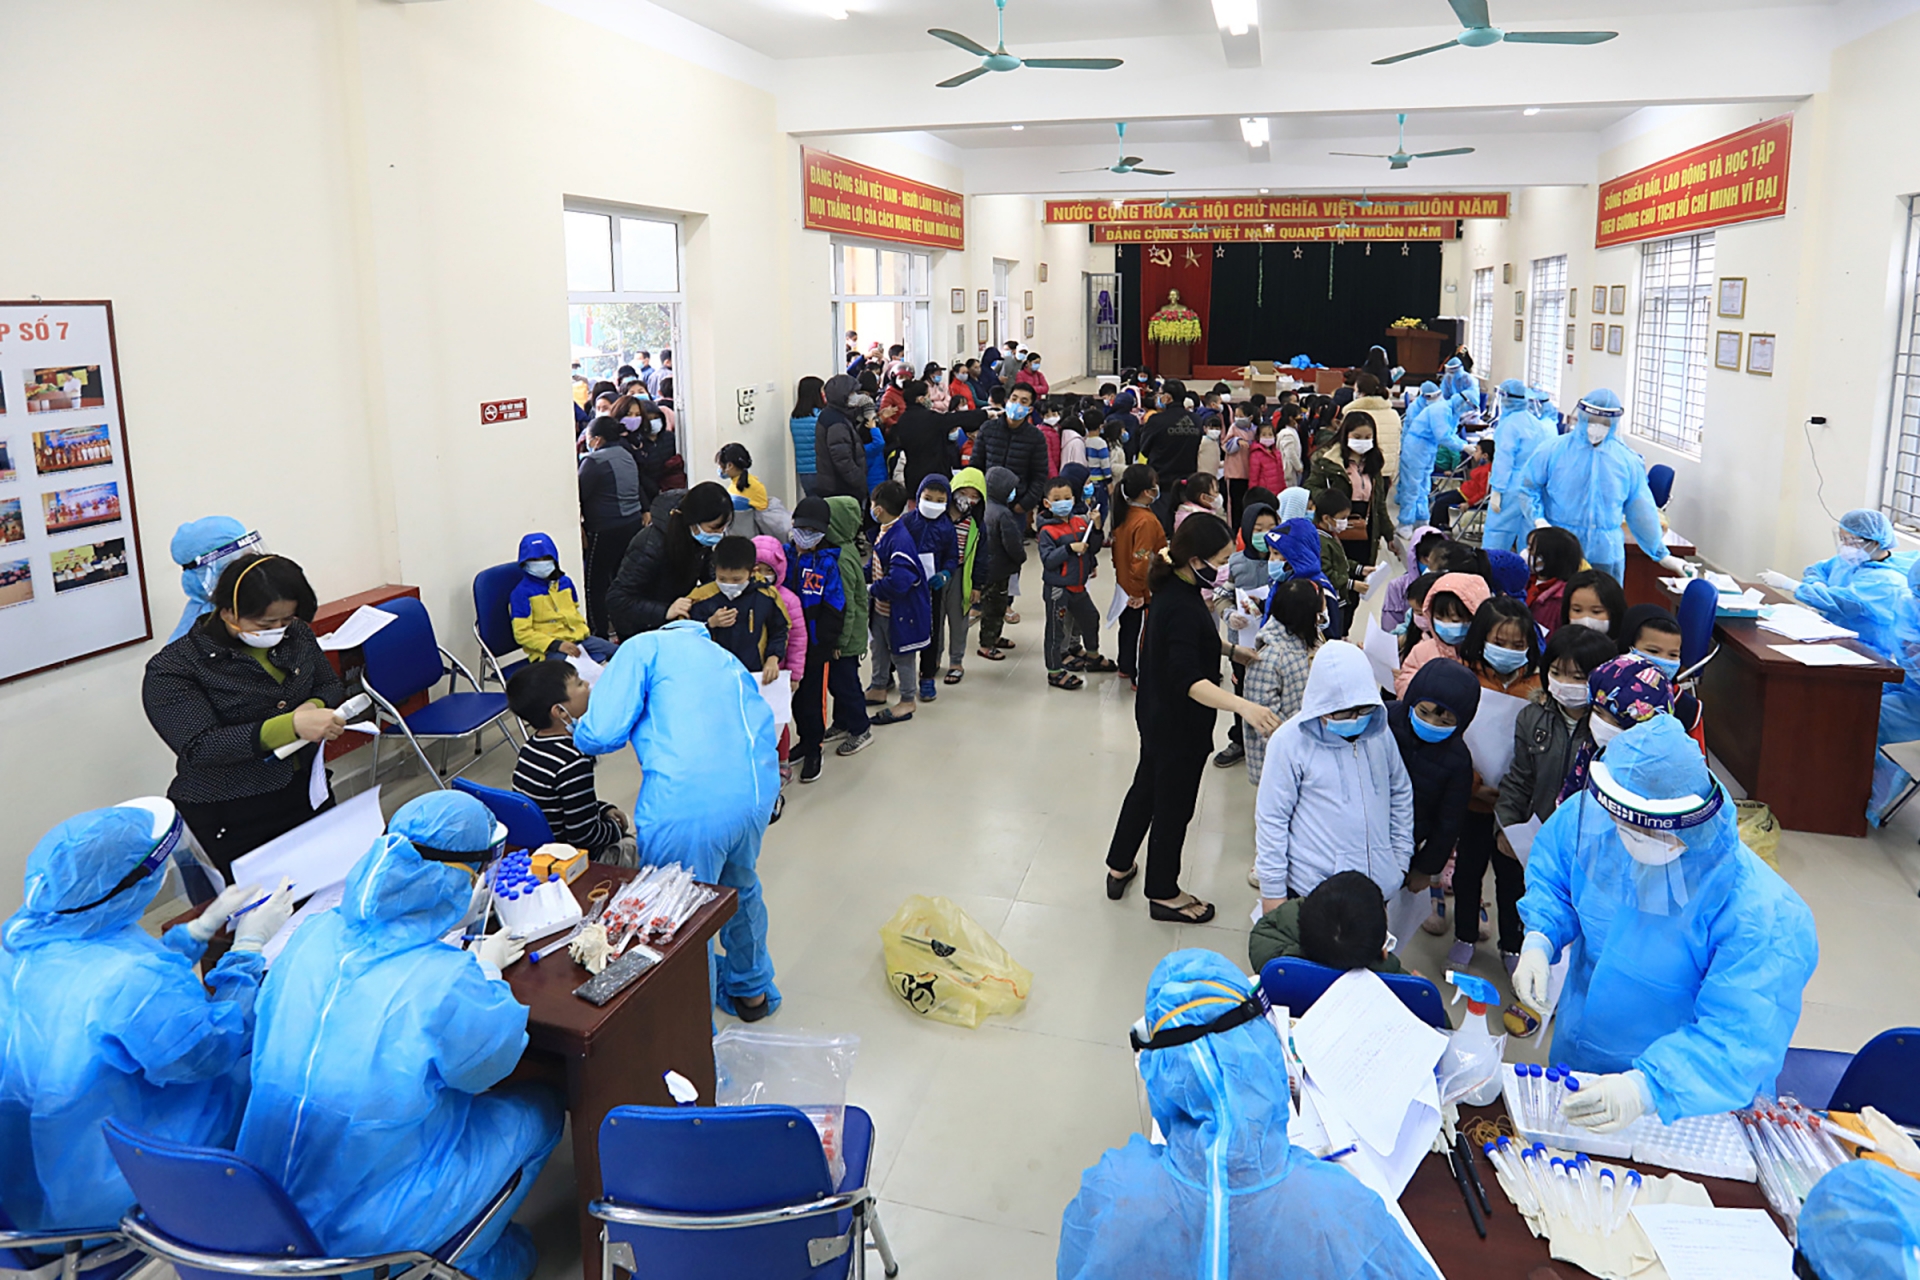 Dozens of primary school students under quarantine over COVID-19 fear